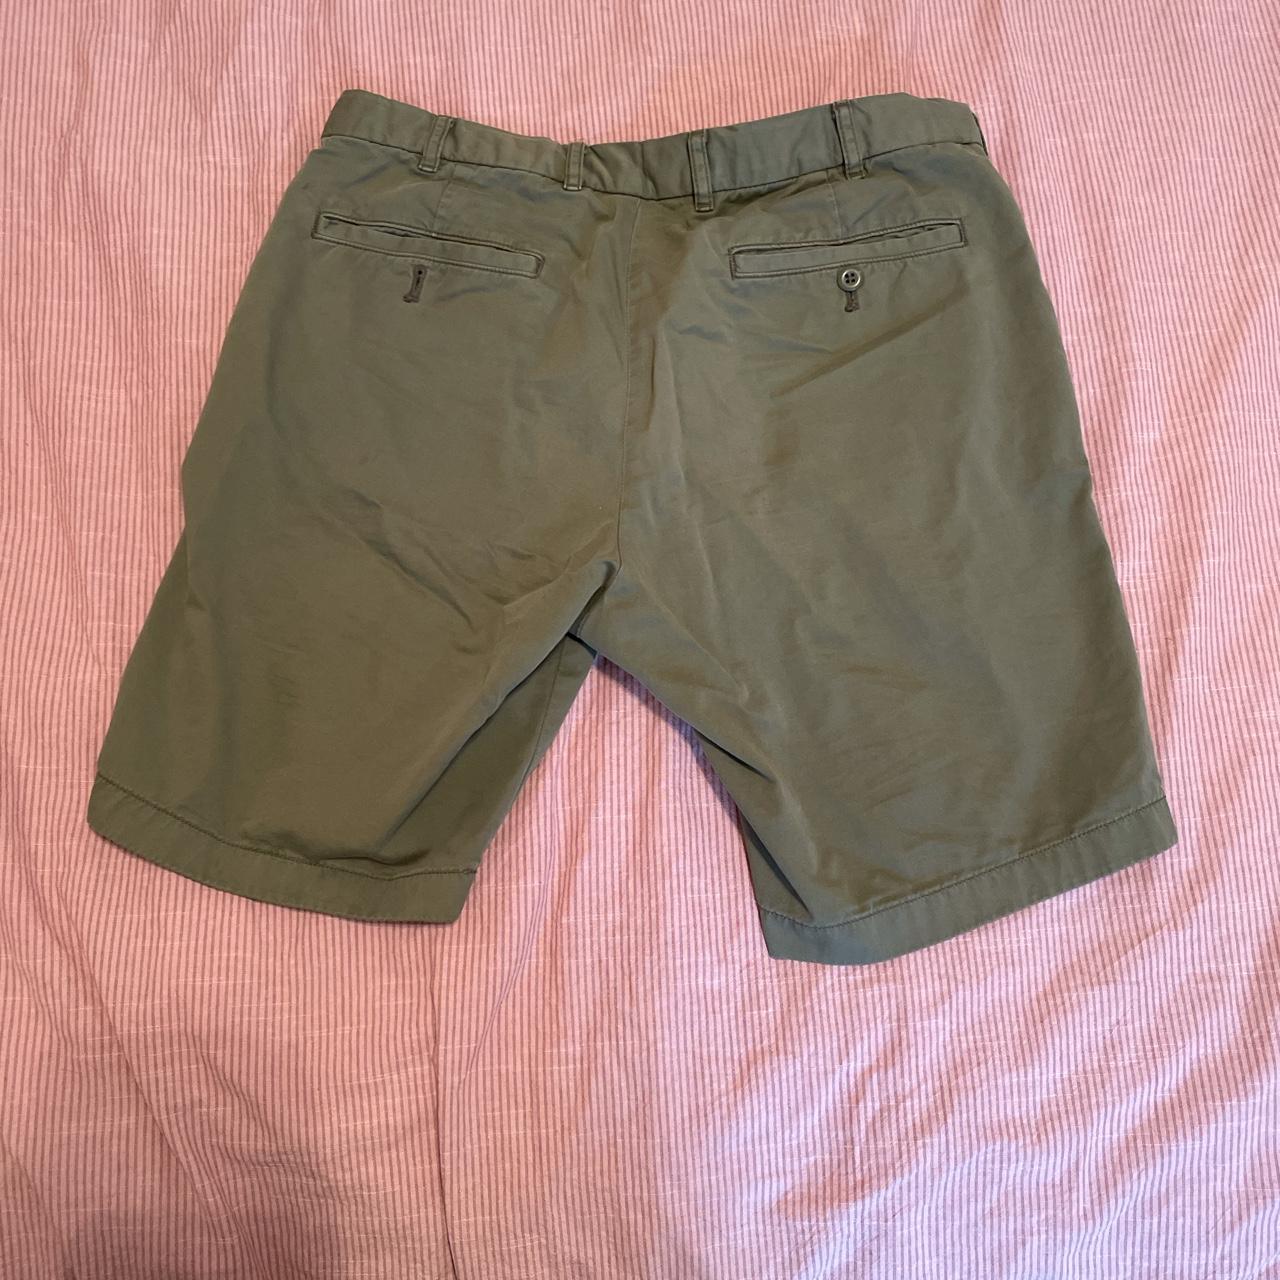 UNIQLO Men's Green Shorts | Depop